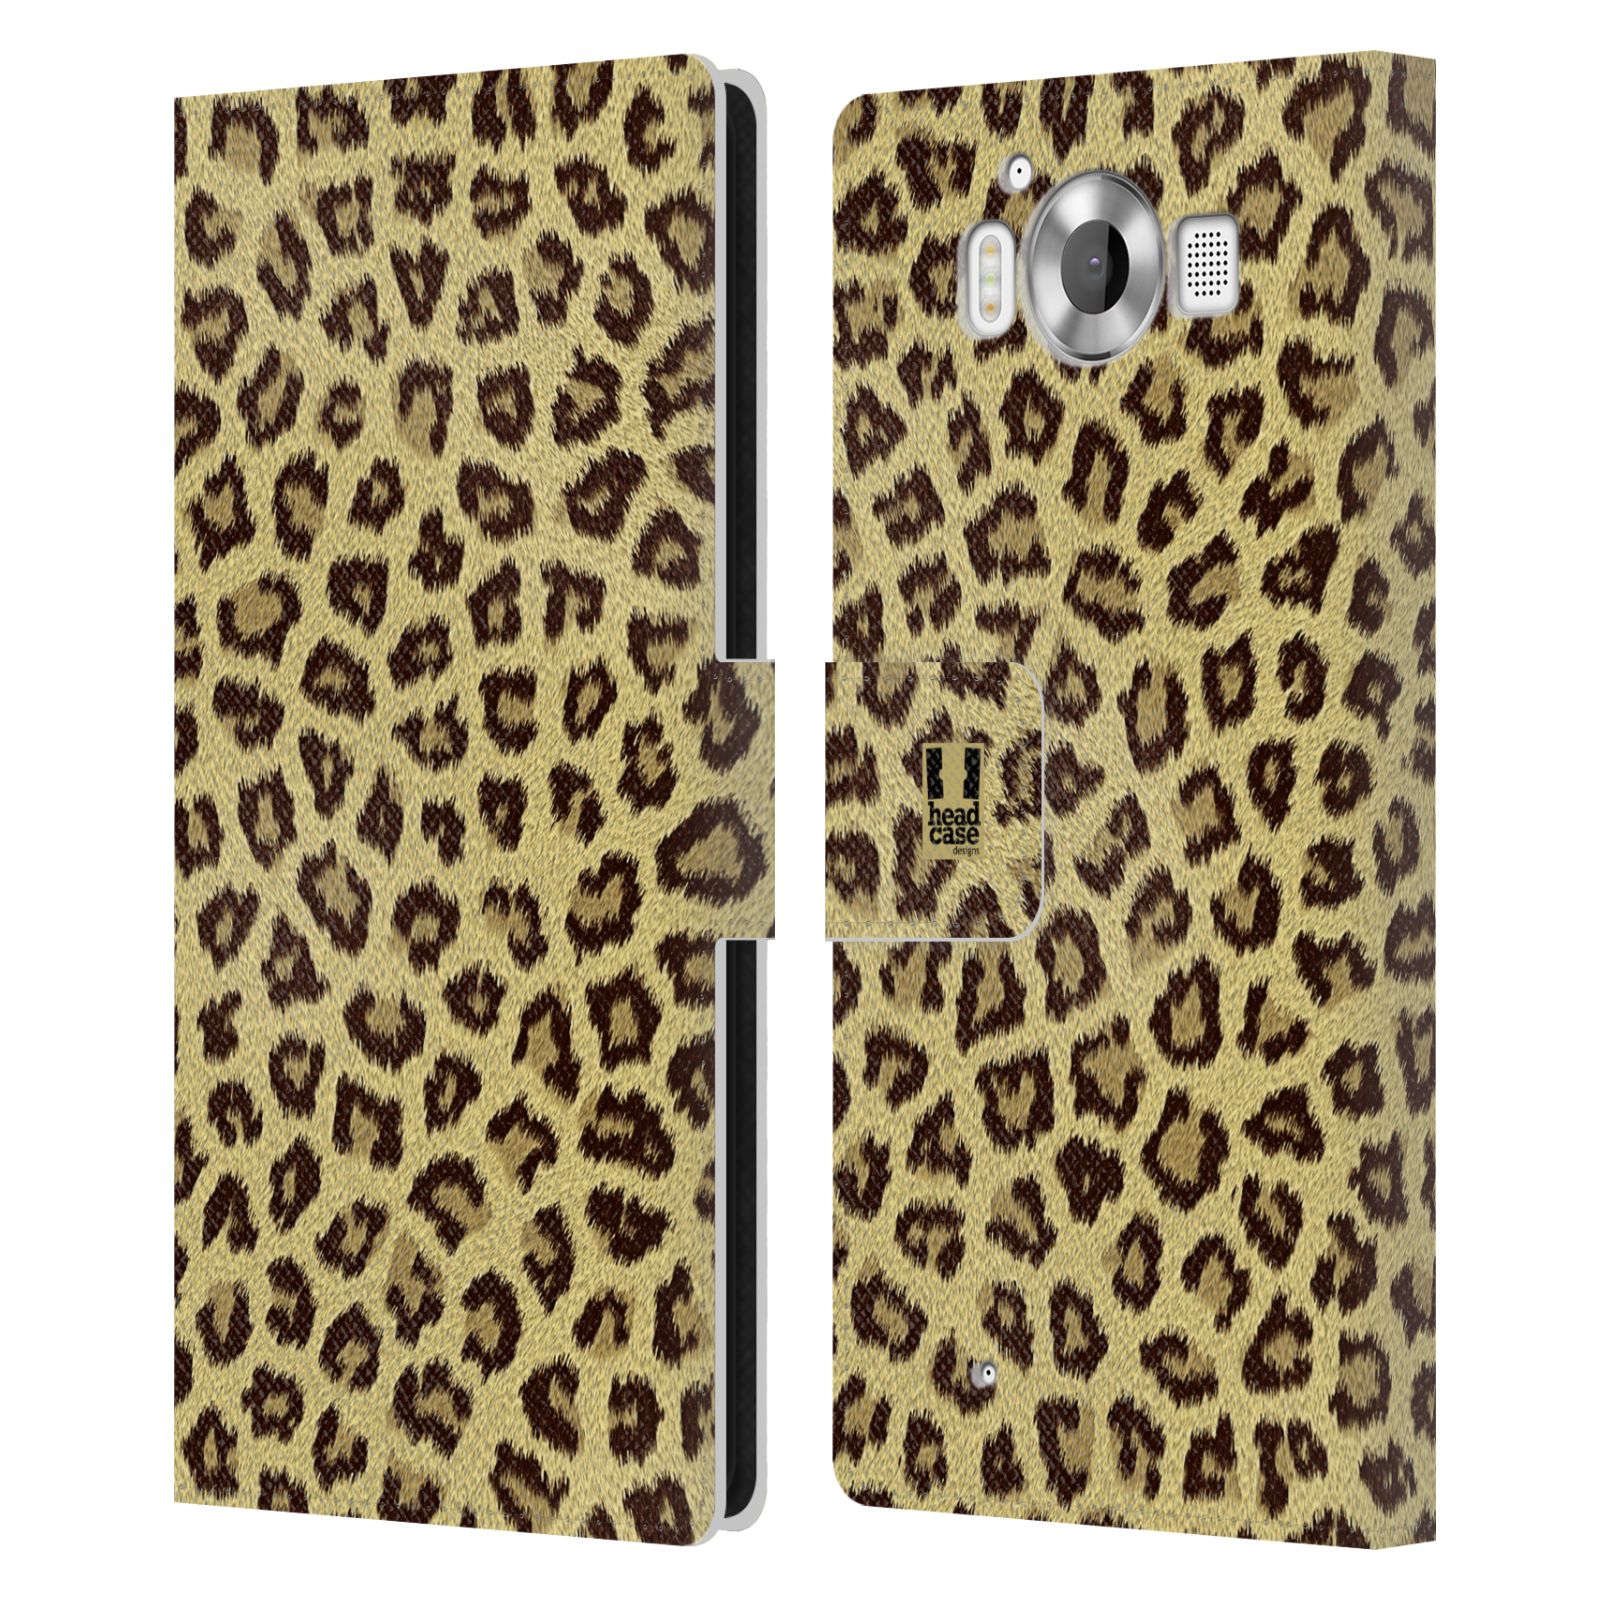 HEAD CASE Flipové pouzdro pro mobil Microsoft Lumia 950 / LUMIA 950 DUAL SIM zvíře srst divoká kolekce jaguár, gepard